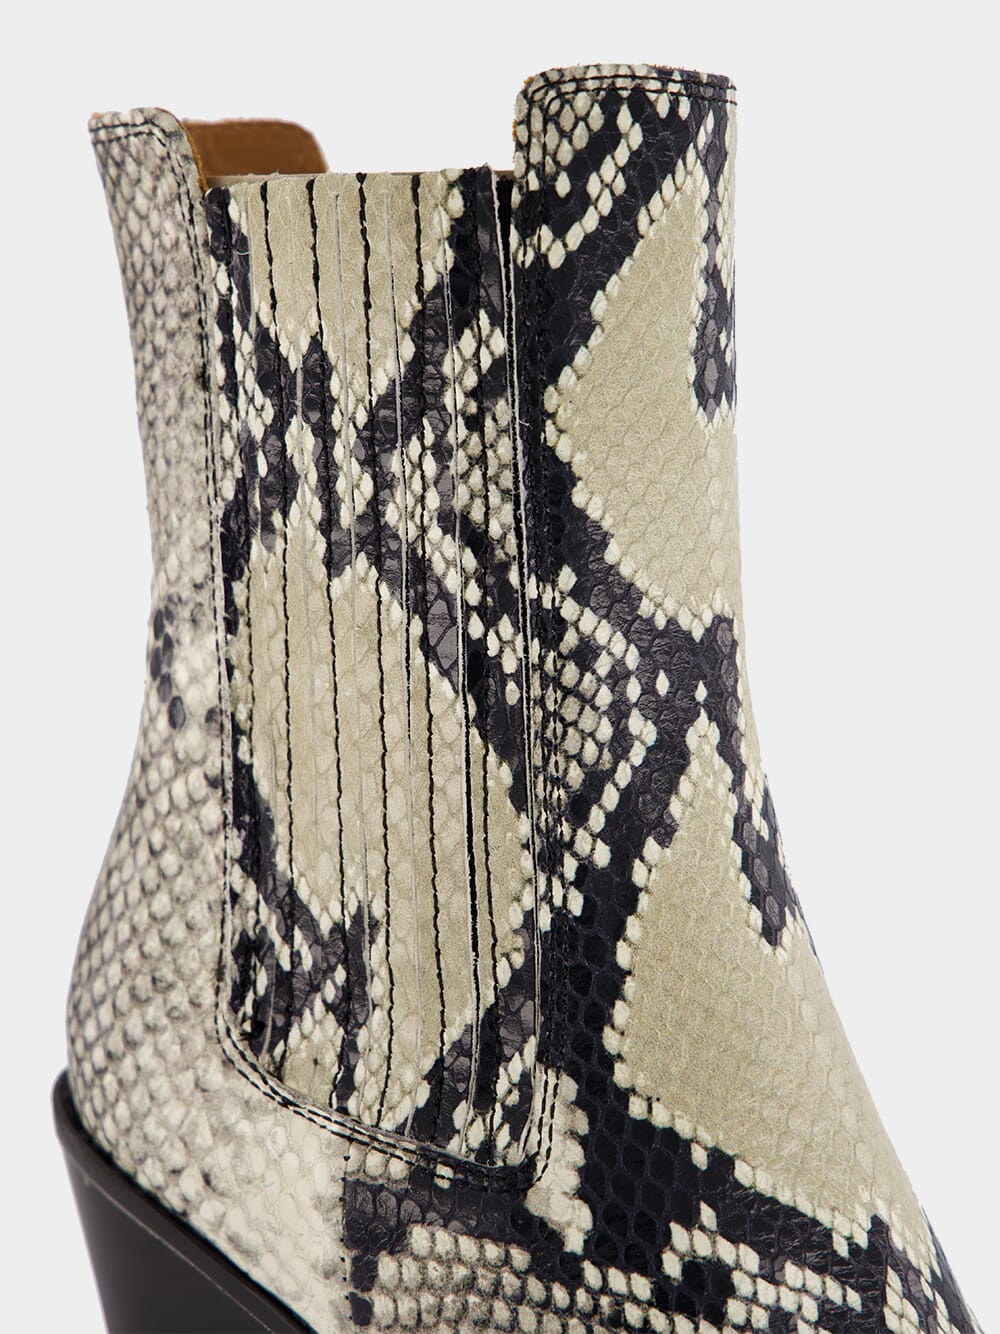 Paris TexasDallas Ankle Python-Print Boot at Fashion Clinic